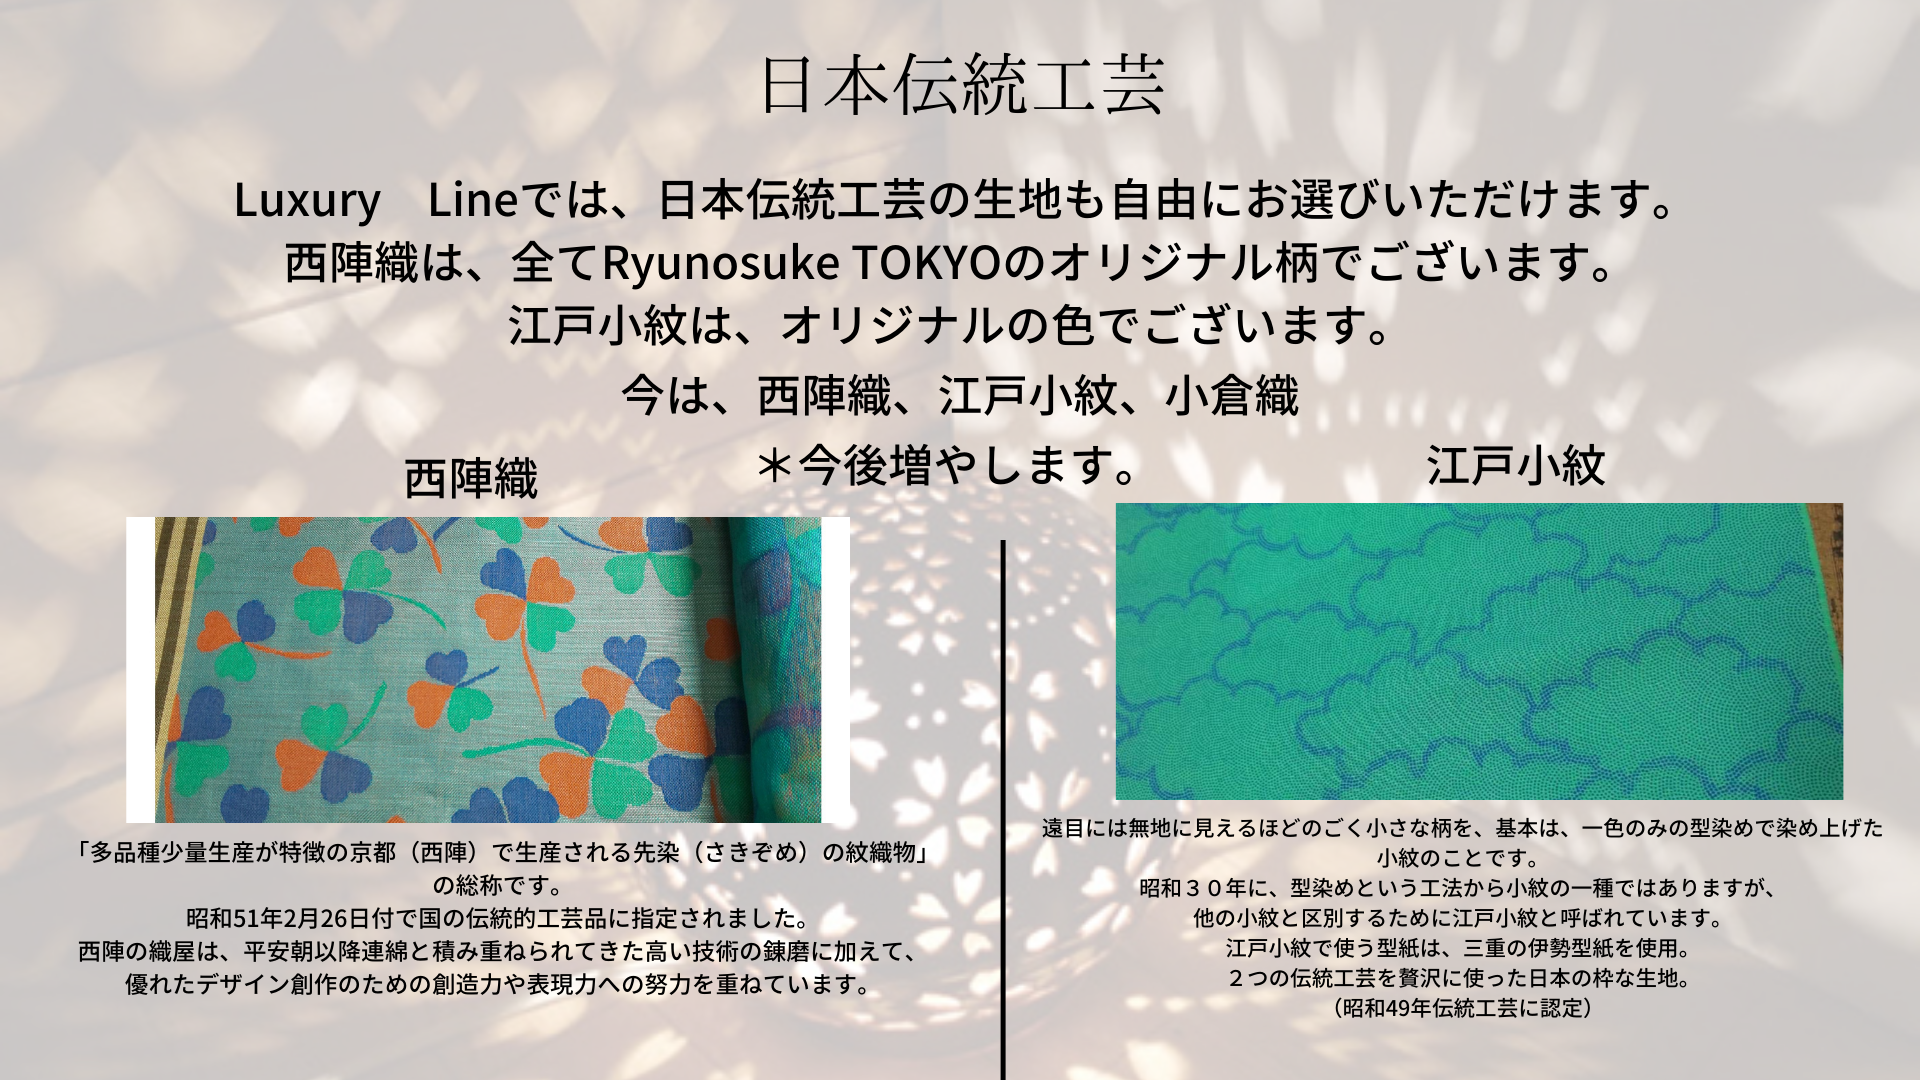 Ryunosuke TOKYO　Luxury Line （オーダー）